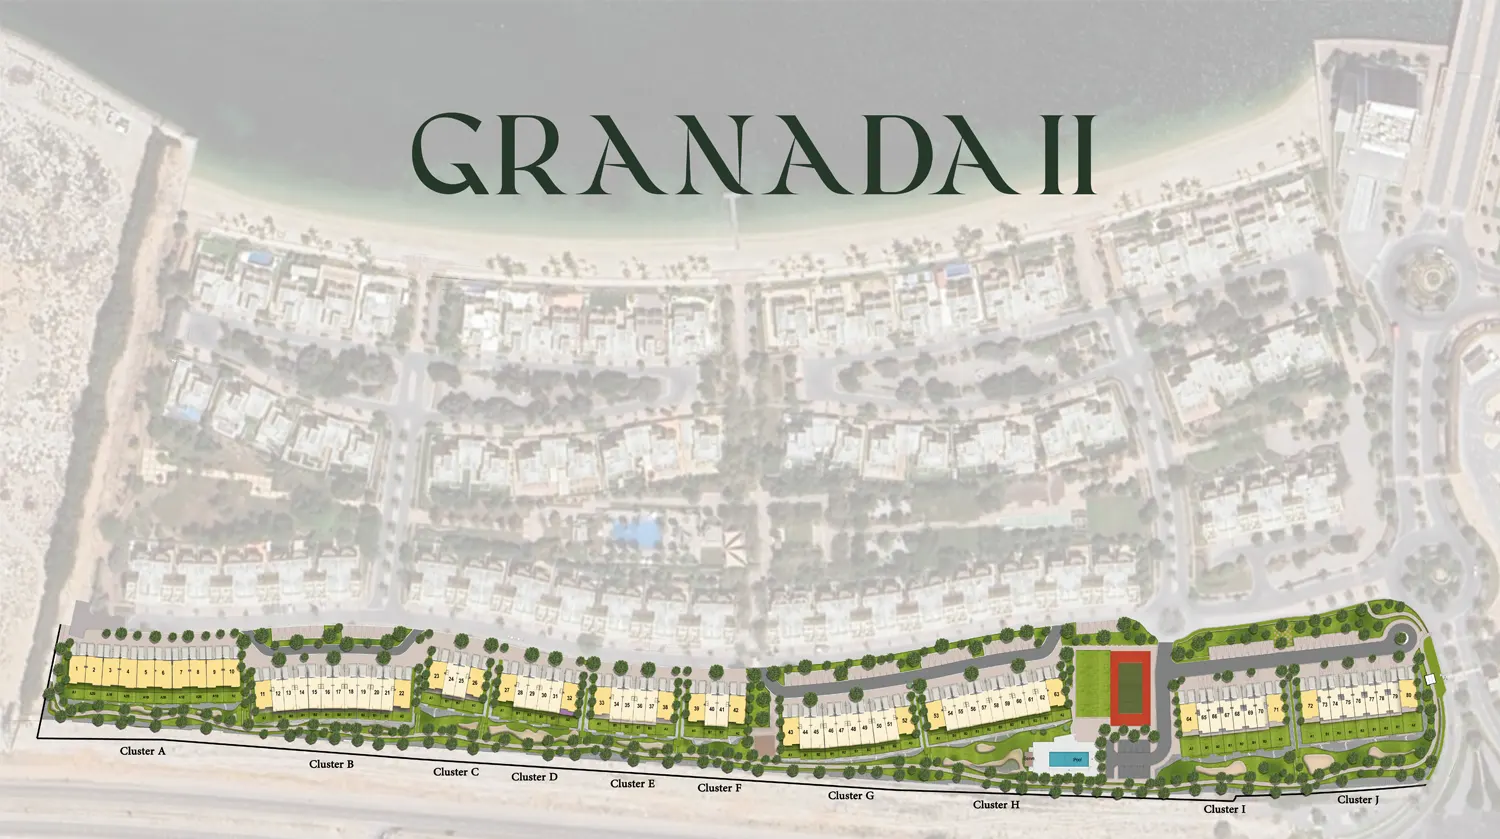 Granada Phase 2 Master Plan